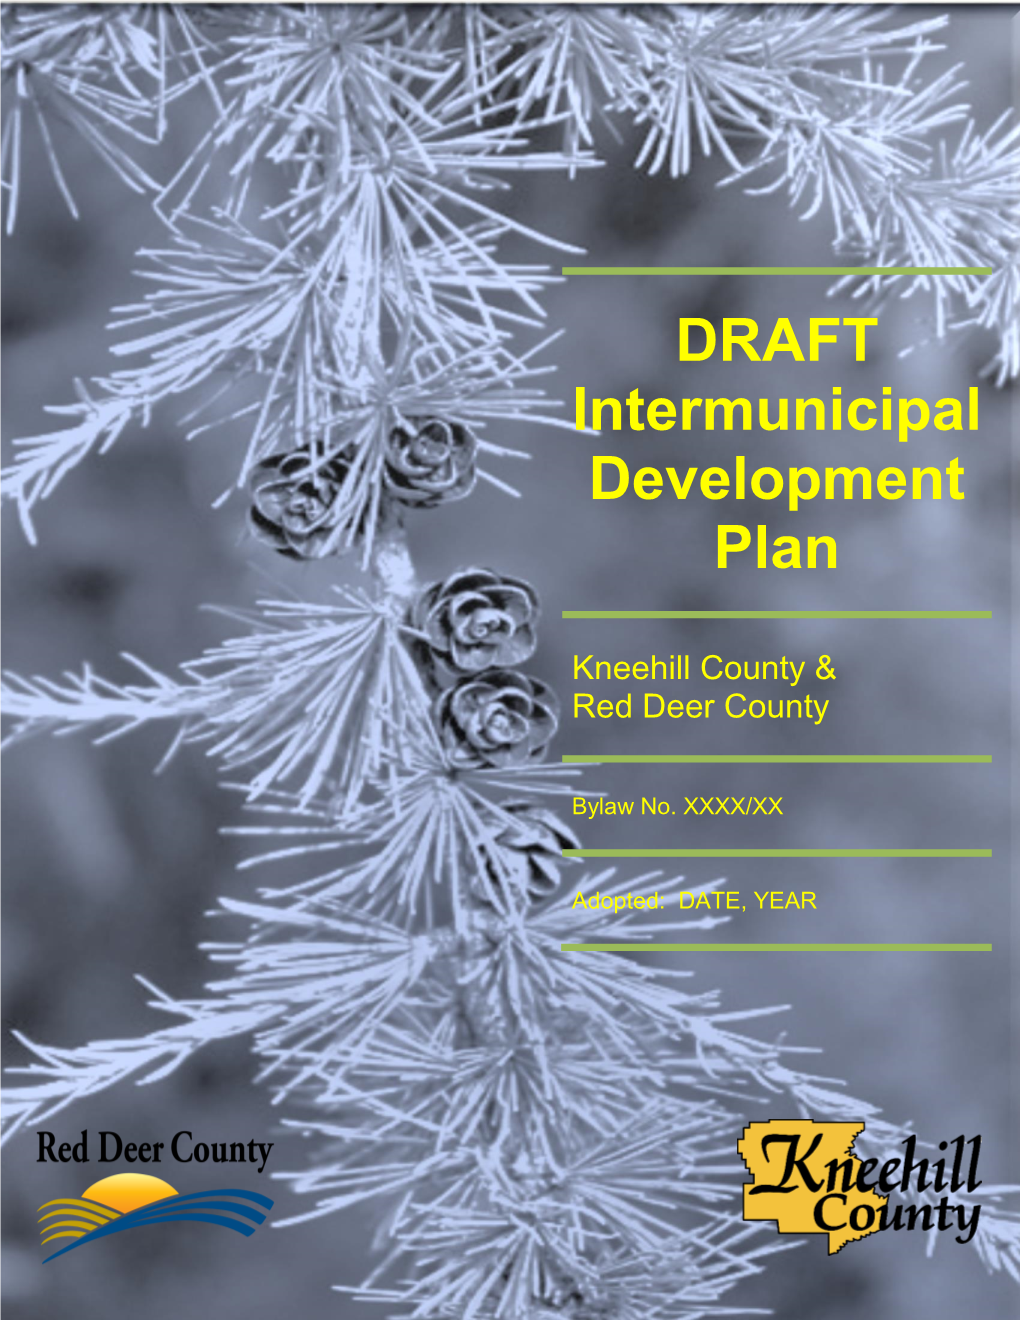 DRAFT Intermunicipal Development Plan